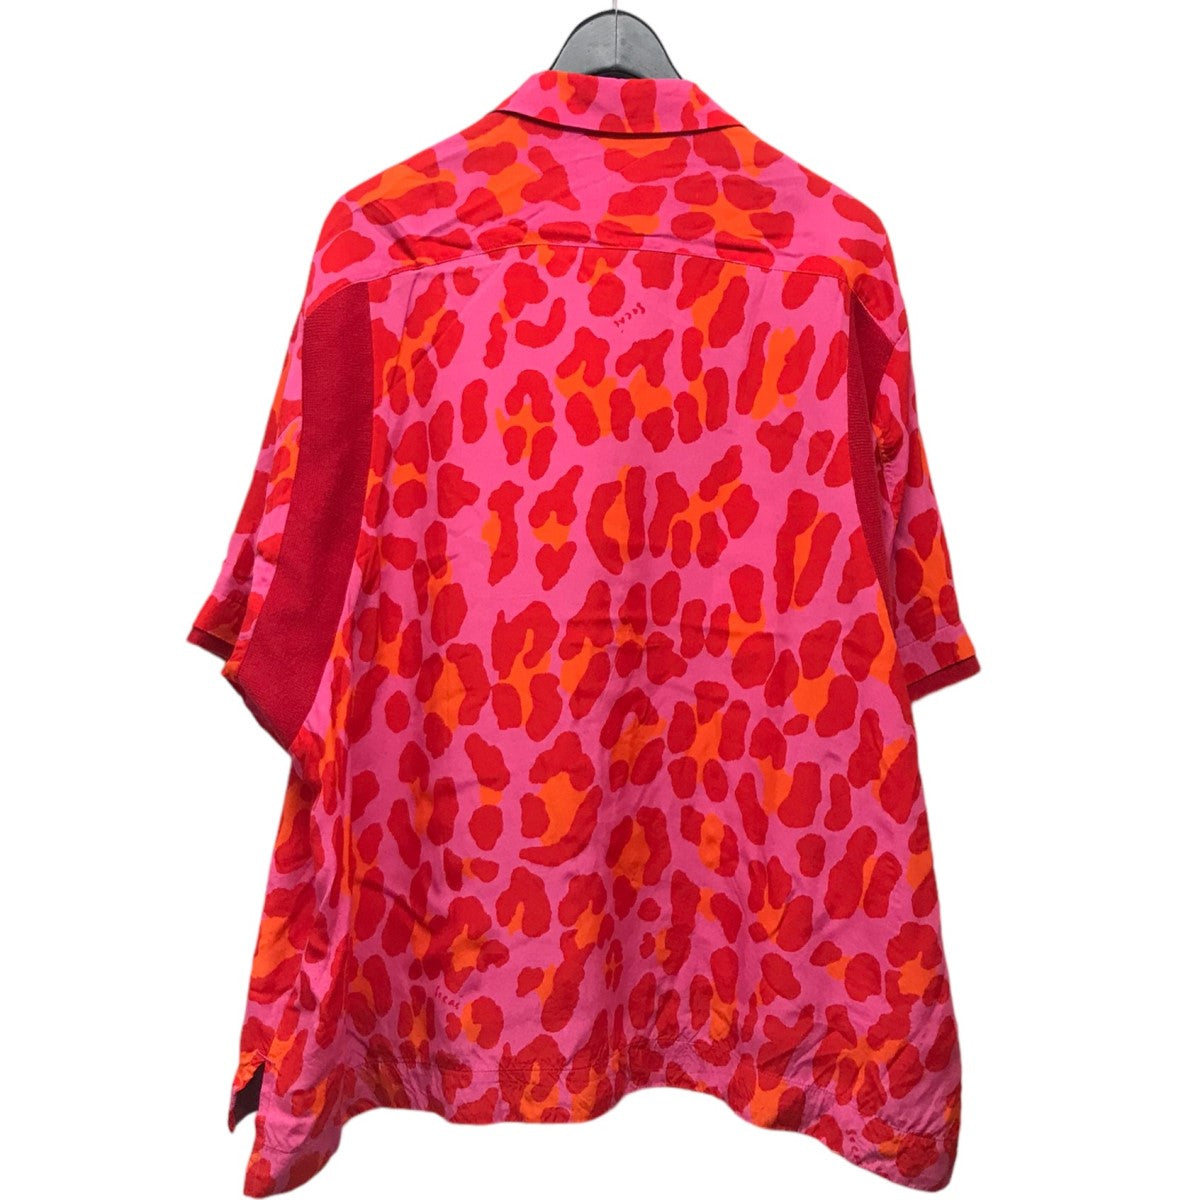 sacai(サカイ) 22SS「Leopard Print Bowling Shirt」 レオパードプリントボーリング半袖シャツ 22-02795M